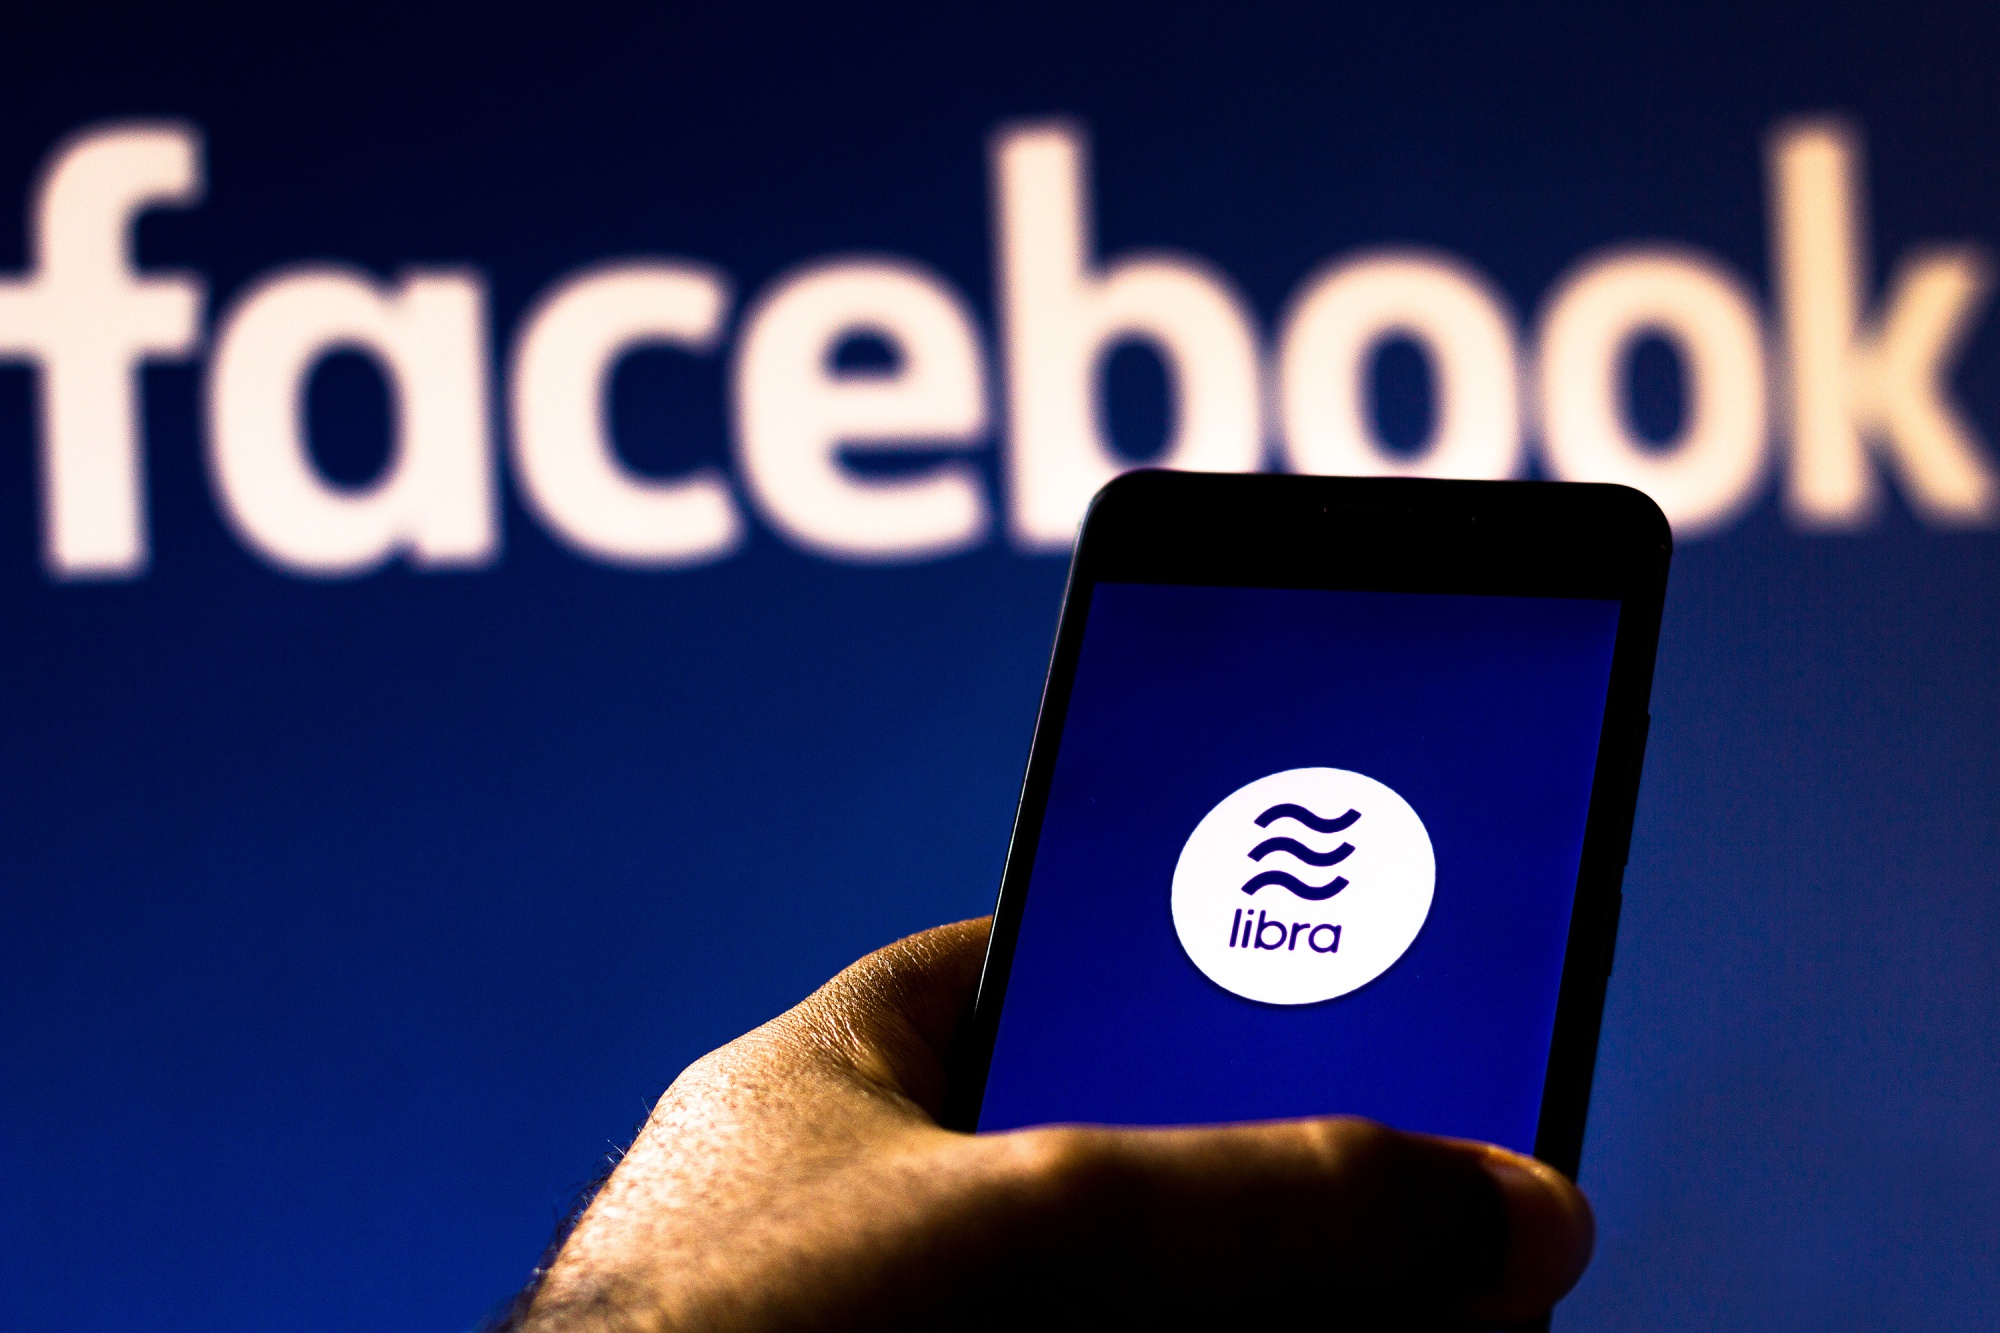 Facebook Libra logo displayed on a smartphone.